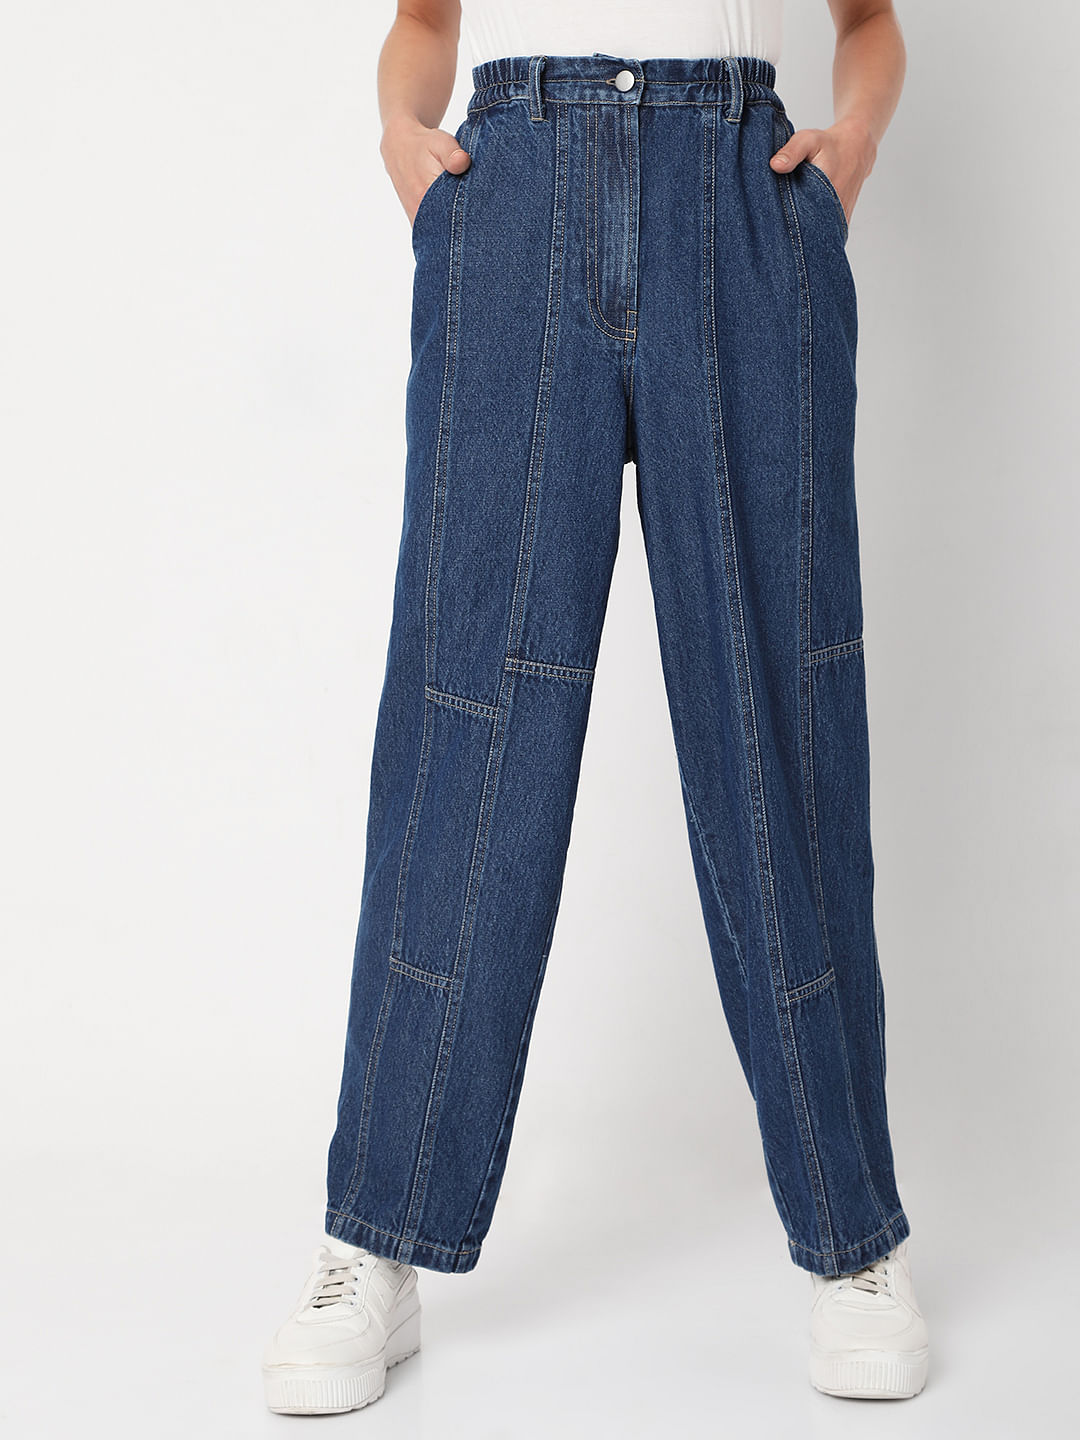 2023 Irregular Women's Denim Jeans Pants| Alibaba.com